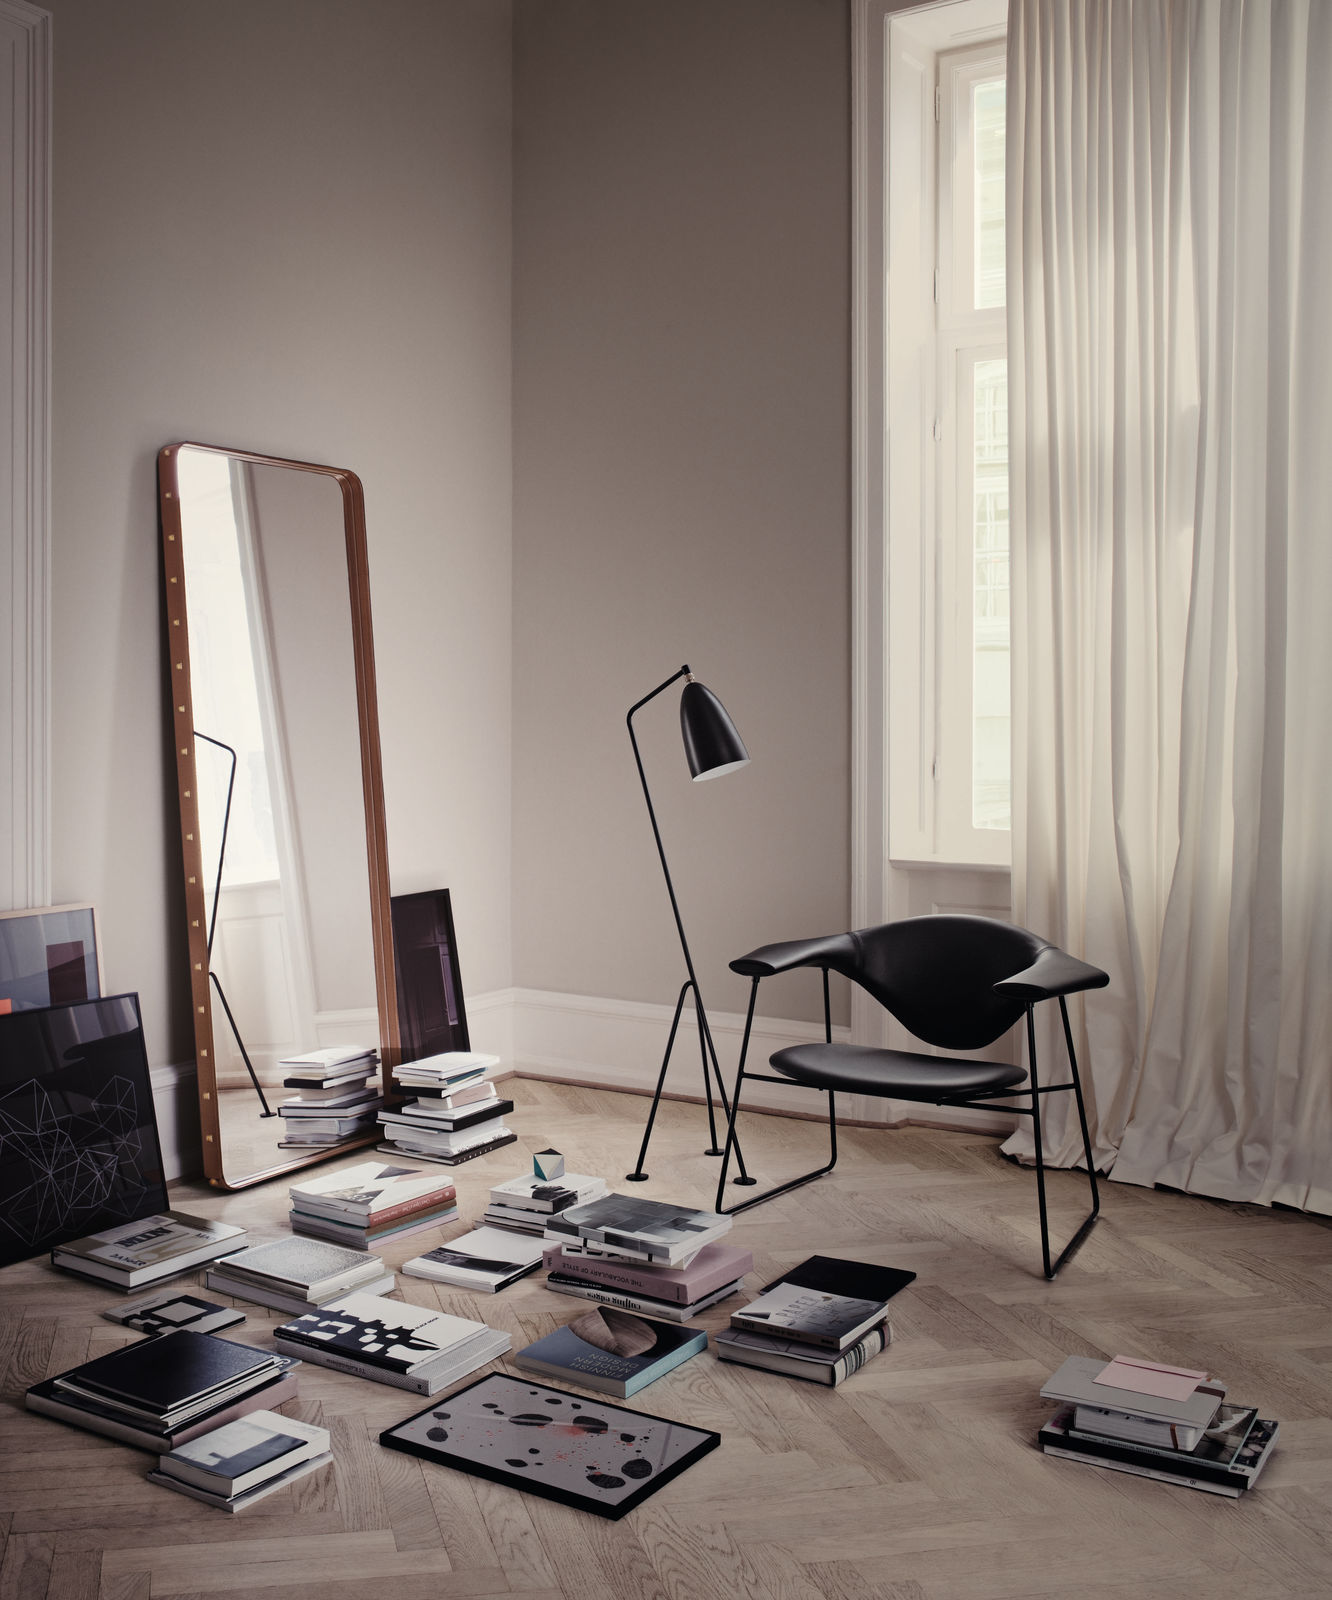 Adnet rectangulaire - L - tan_Gräshoppa floor lamp - jet black_Masculo lounge chair - black leather-1600x1600